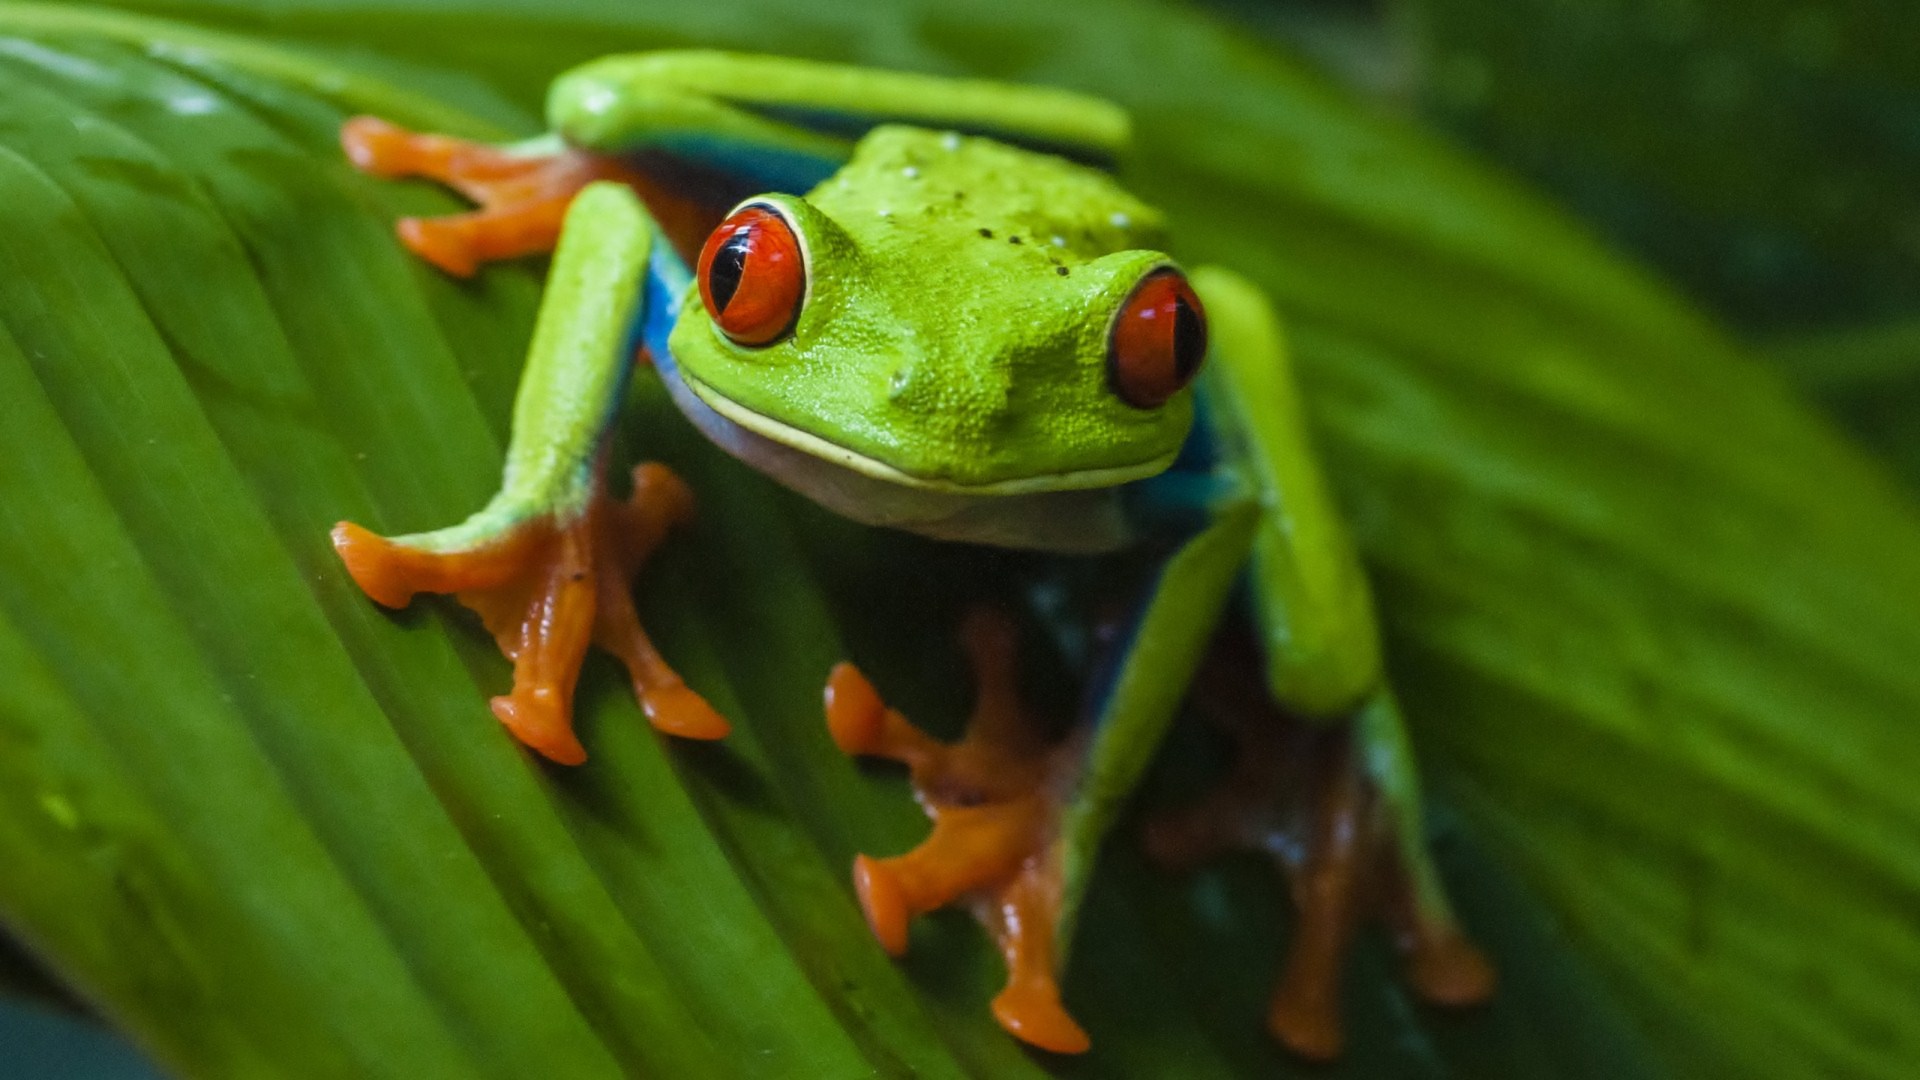 frog wallpaper,frog,tree frog,agalychnis,amphibian,red eyed tree frog